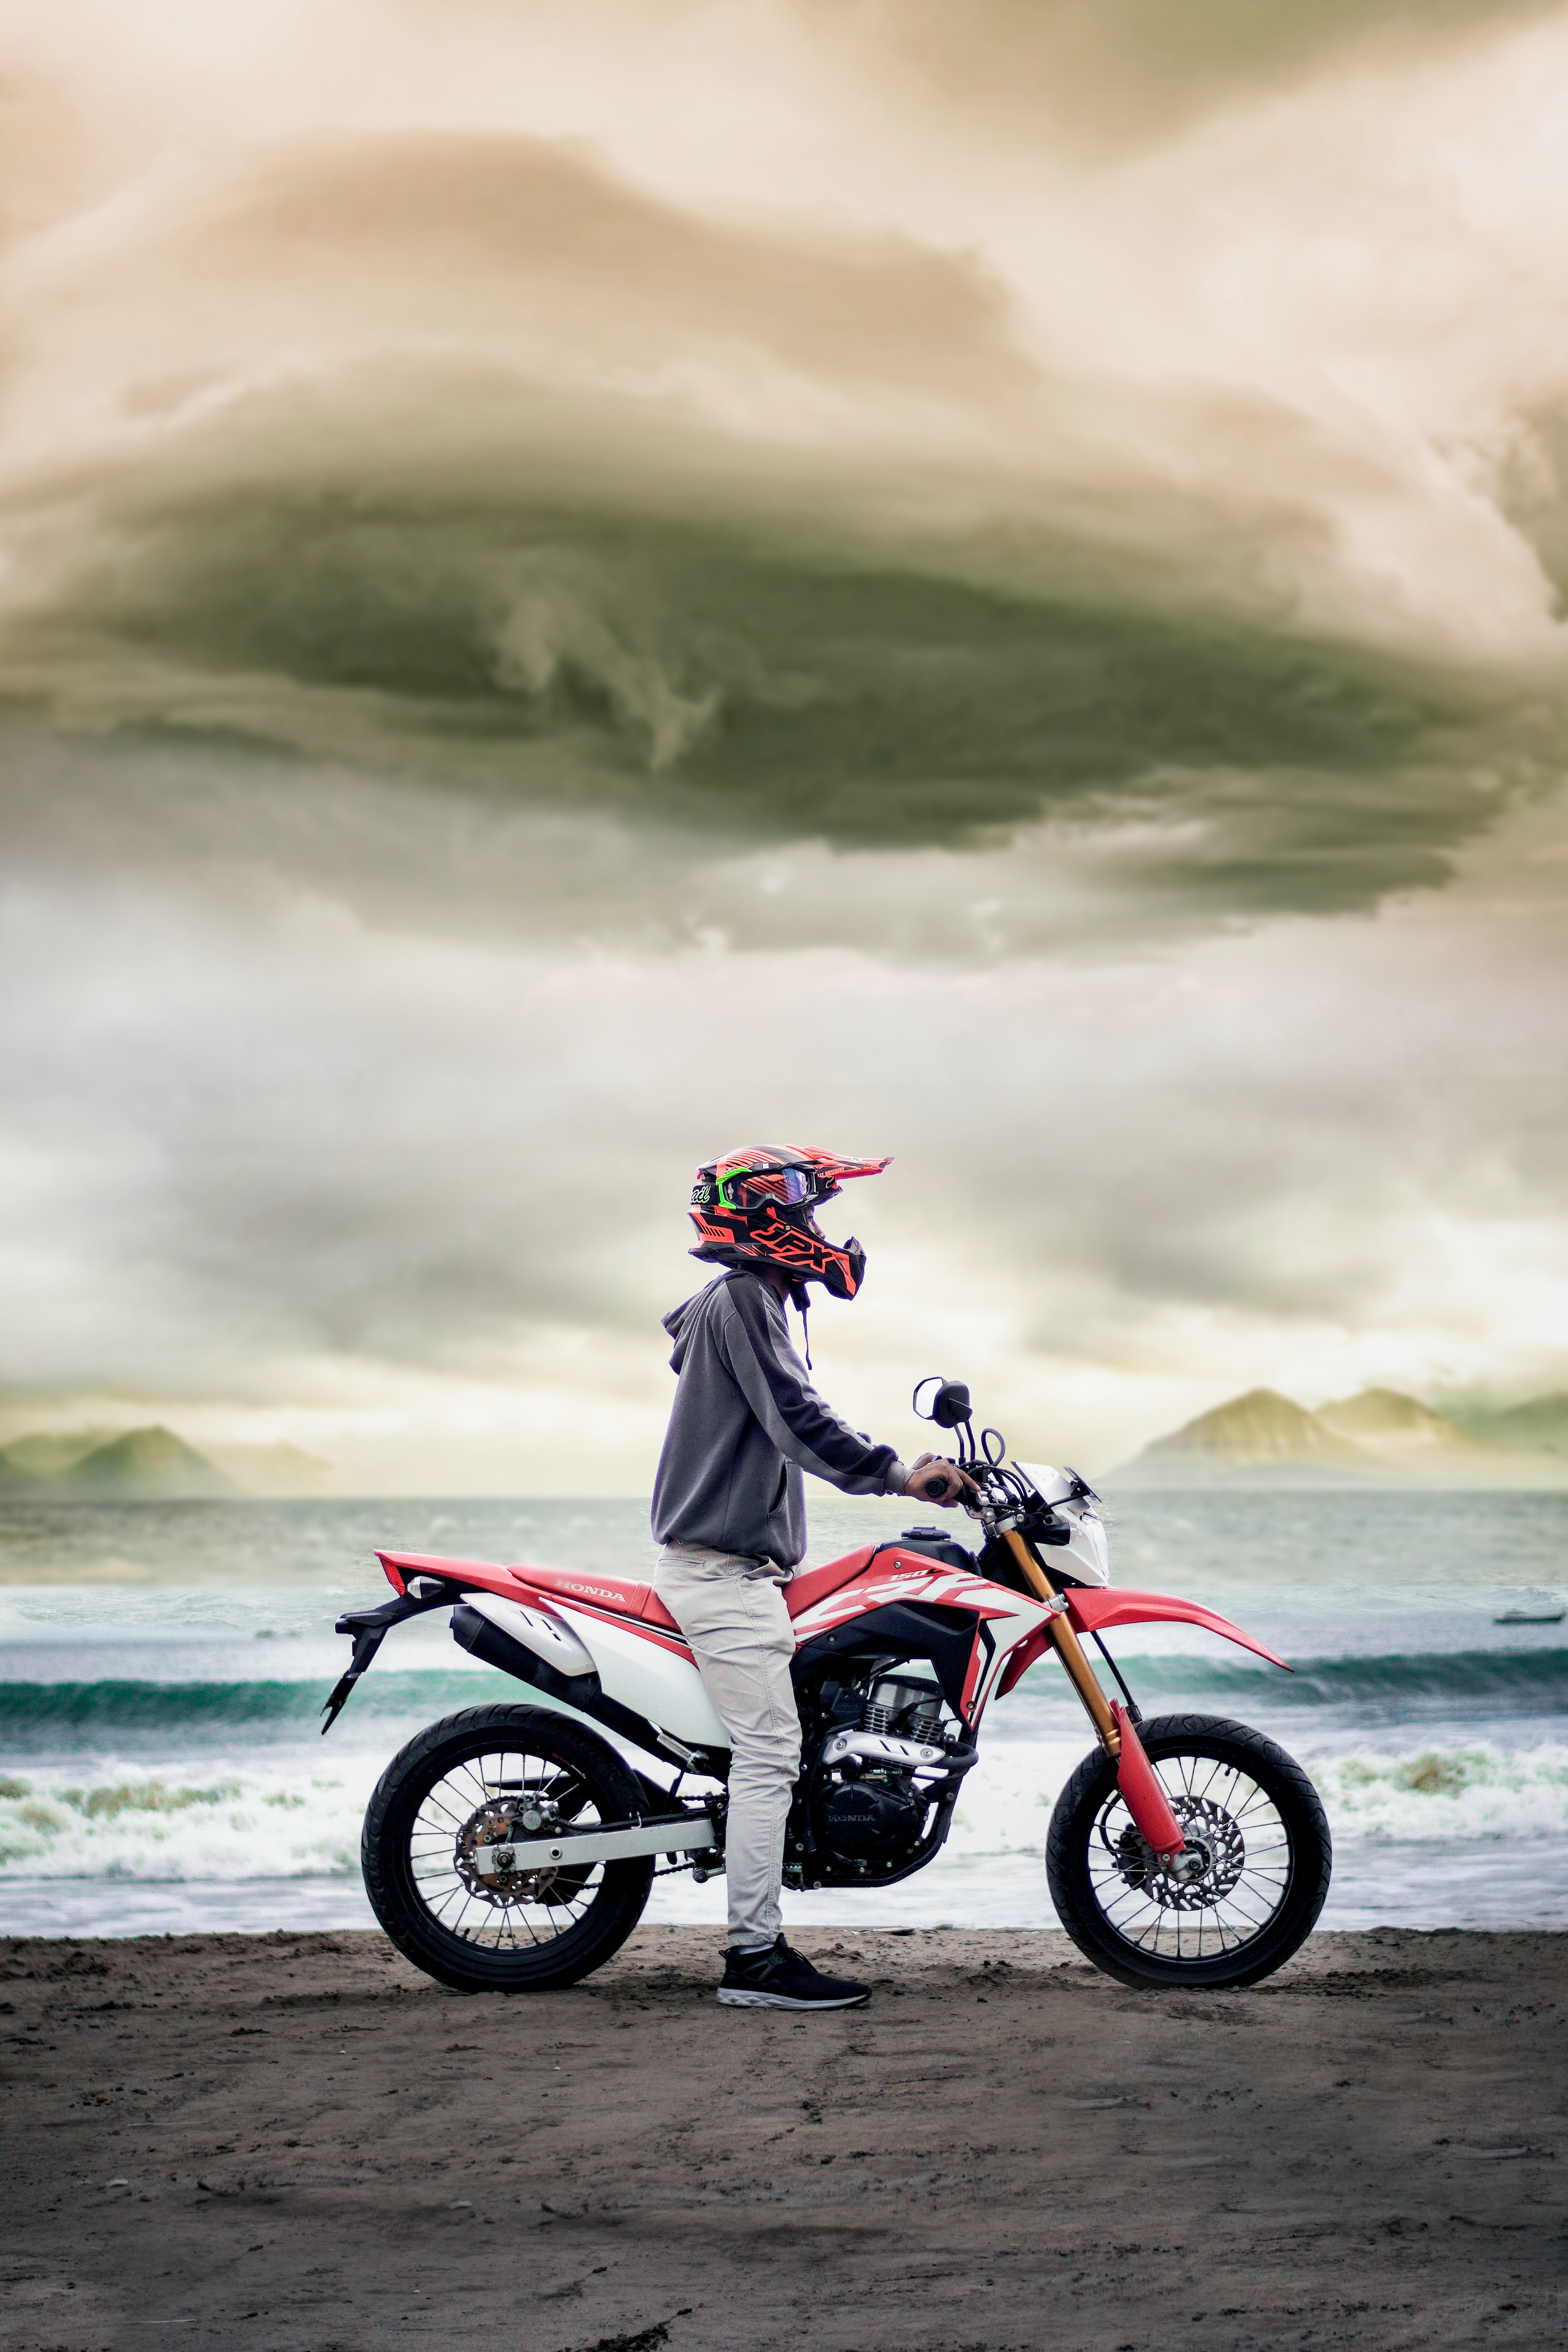 91405 Hintergrundbild herunterladen strand, motorräder, motorradfahrer, motorrad, fahrrad - Bildschirmschoner und Bilder kostenlos